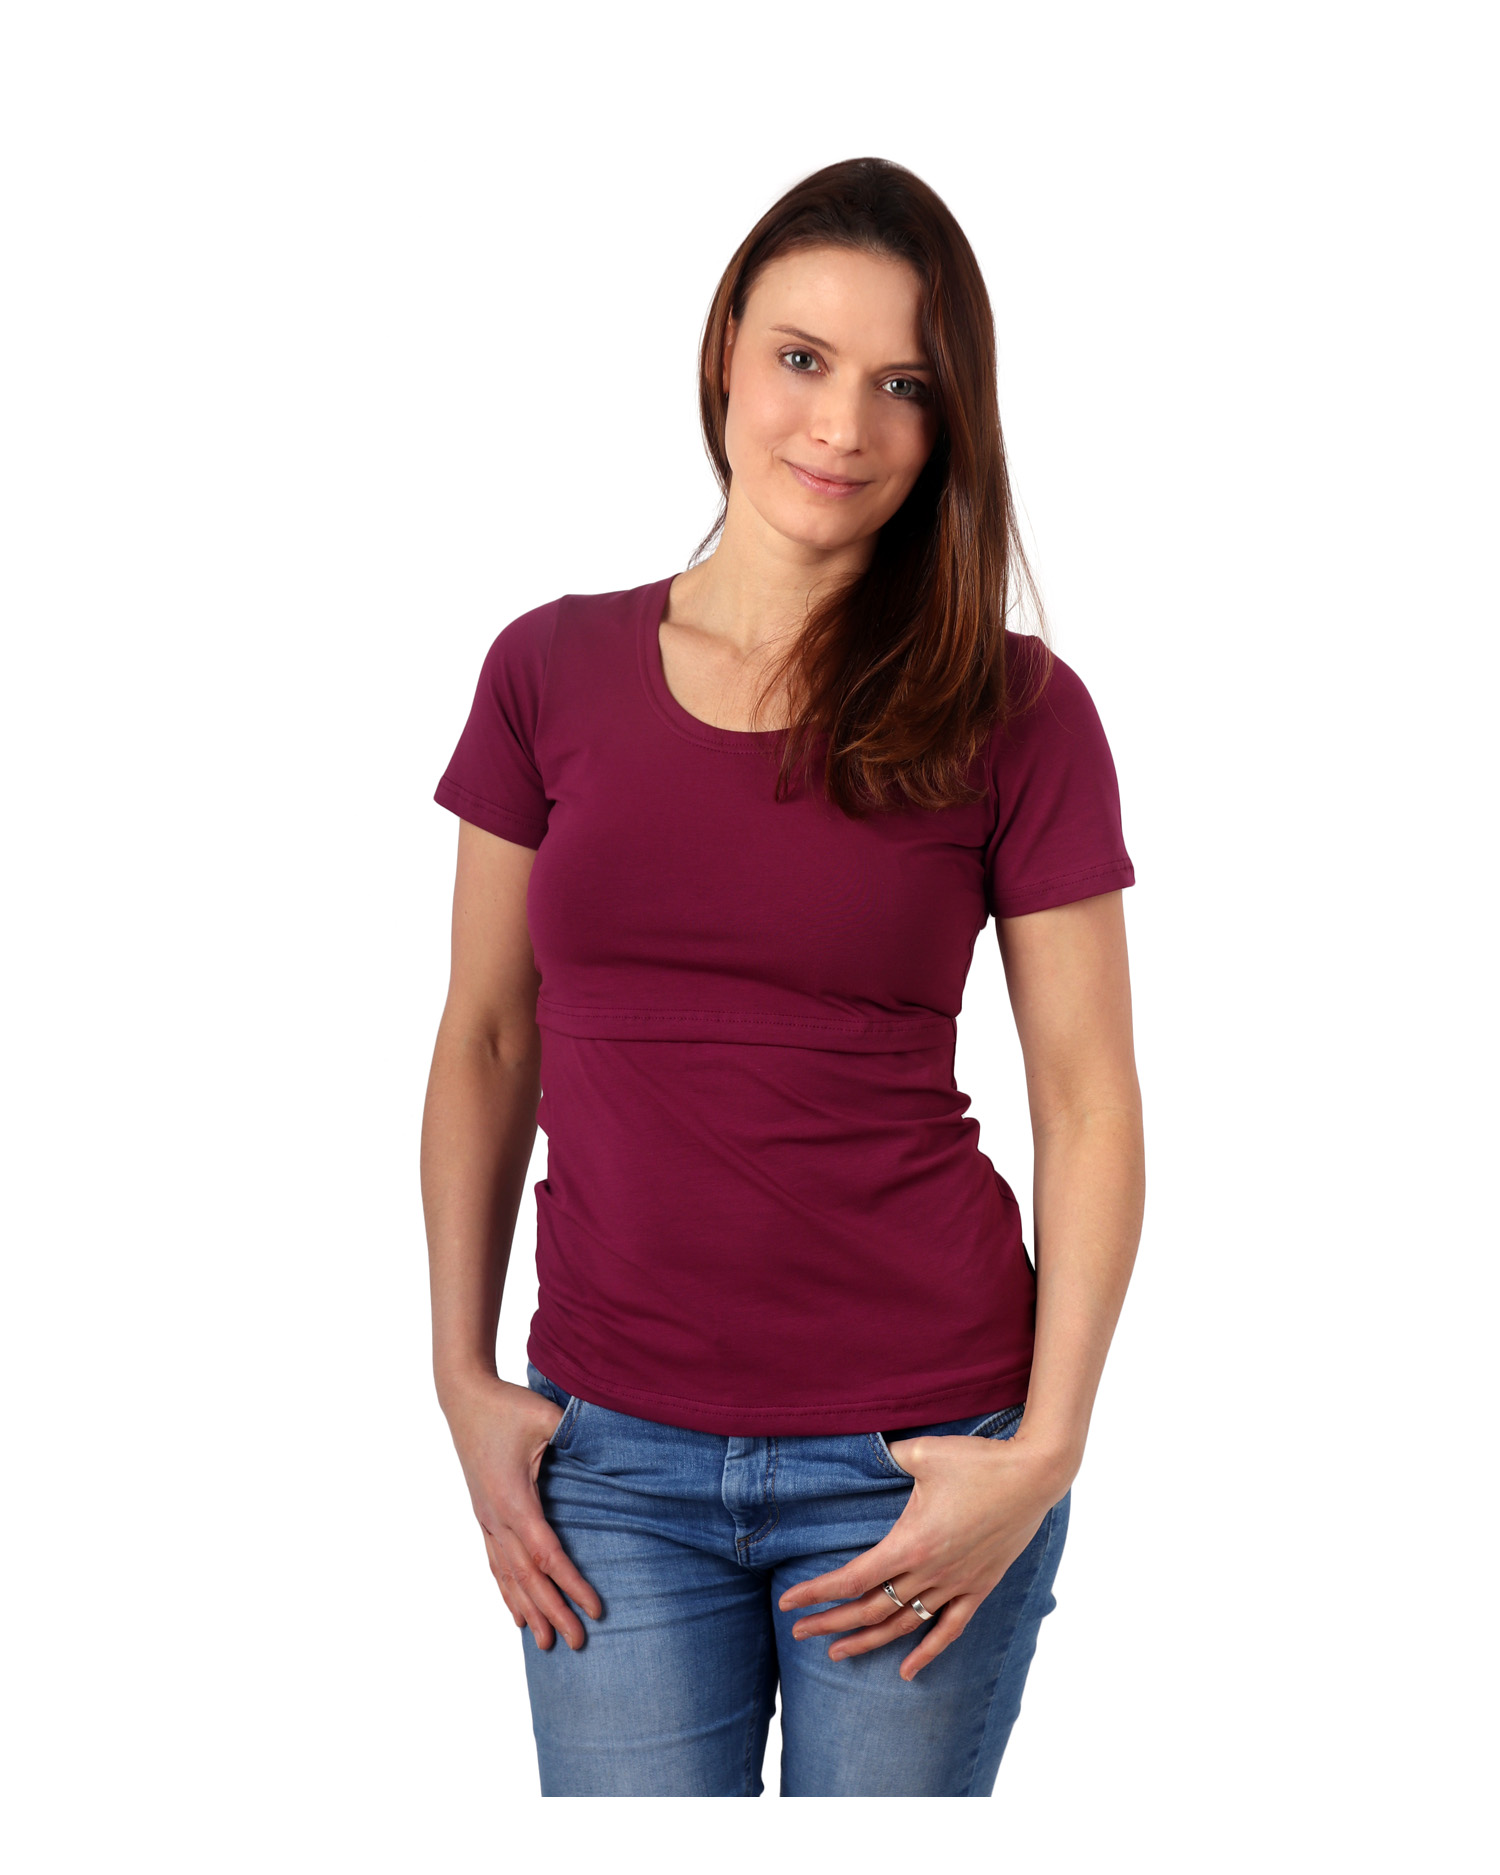 Breast-feeding T-shirt Katerina, short sleeves, cyclamen